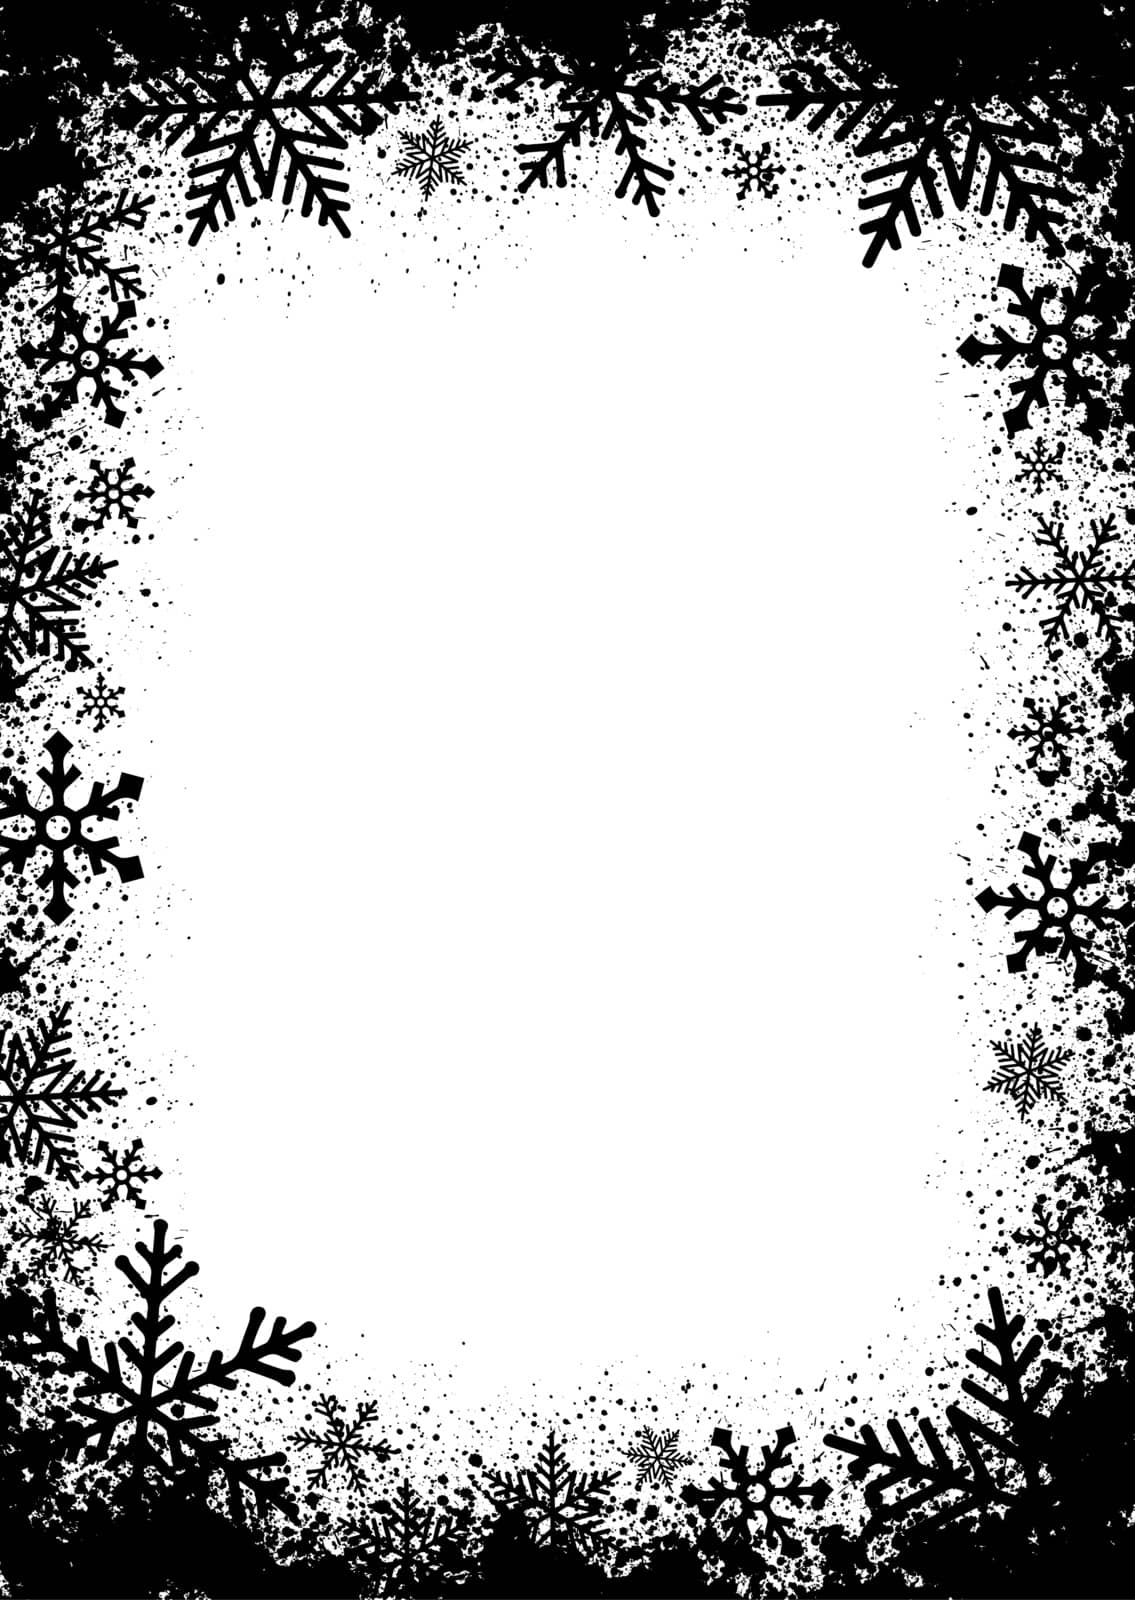 winter image background frame ( snow crystal)